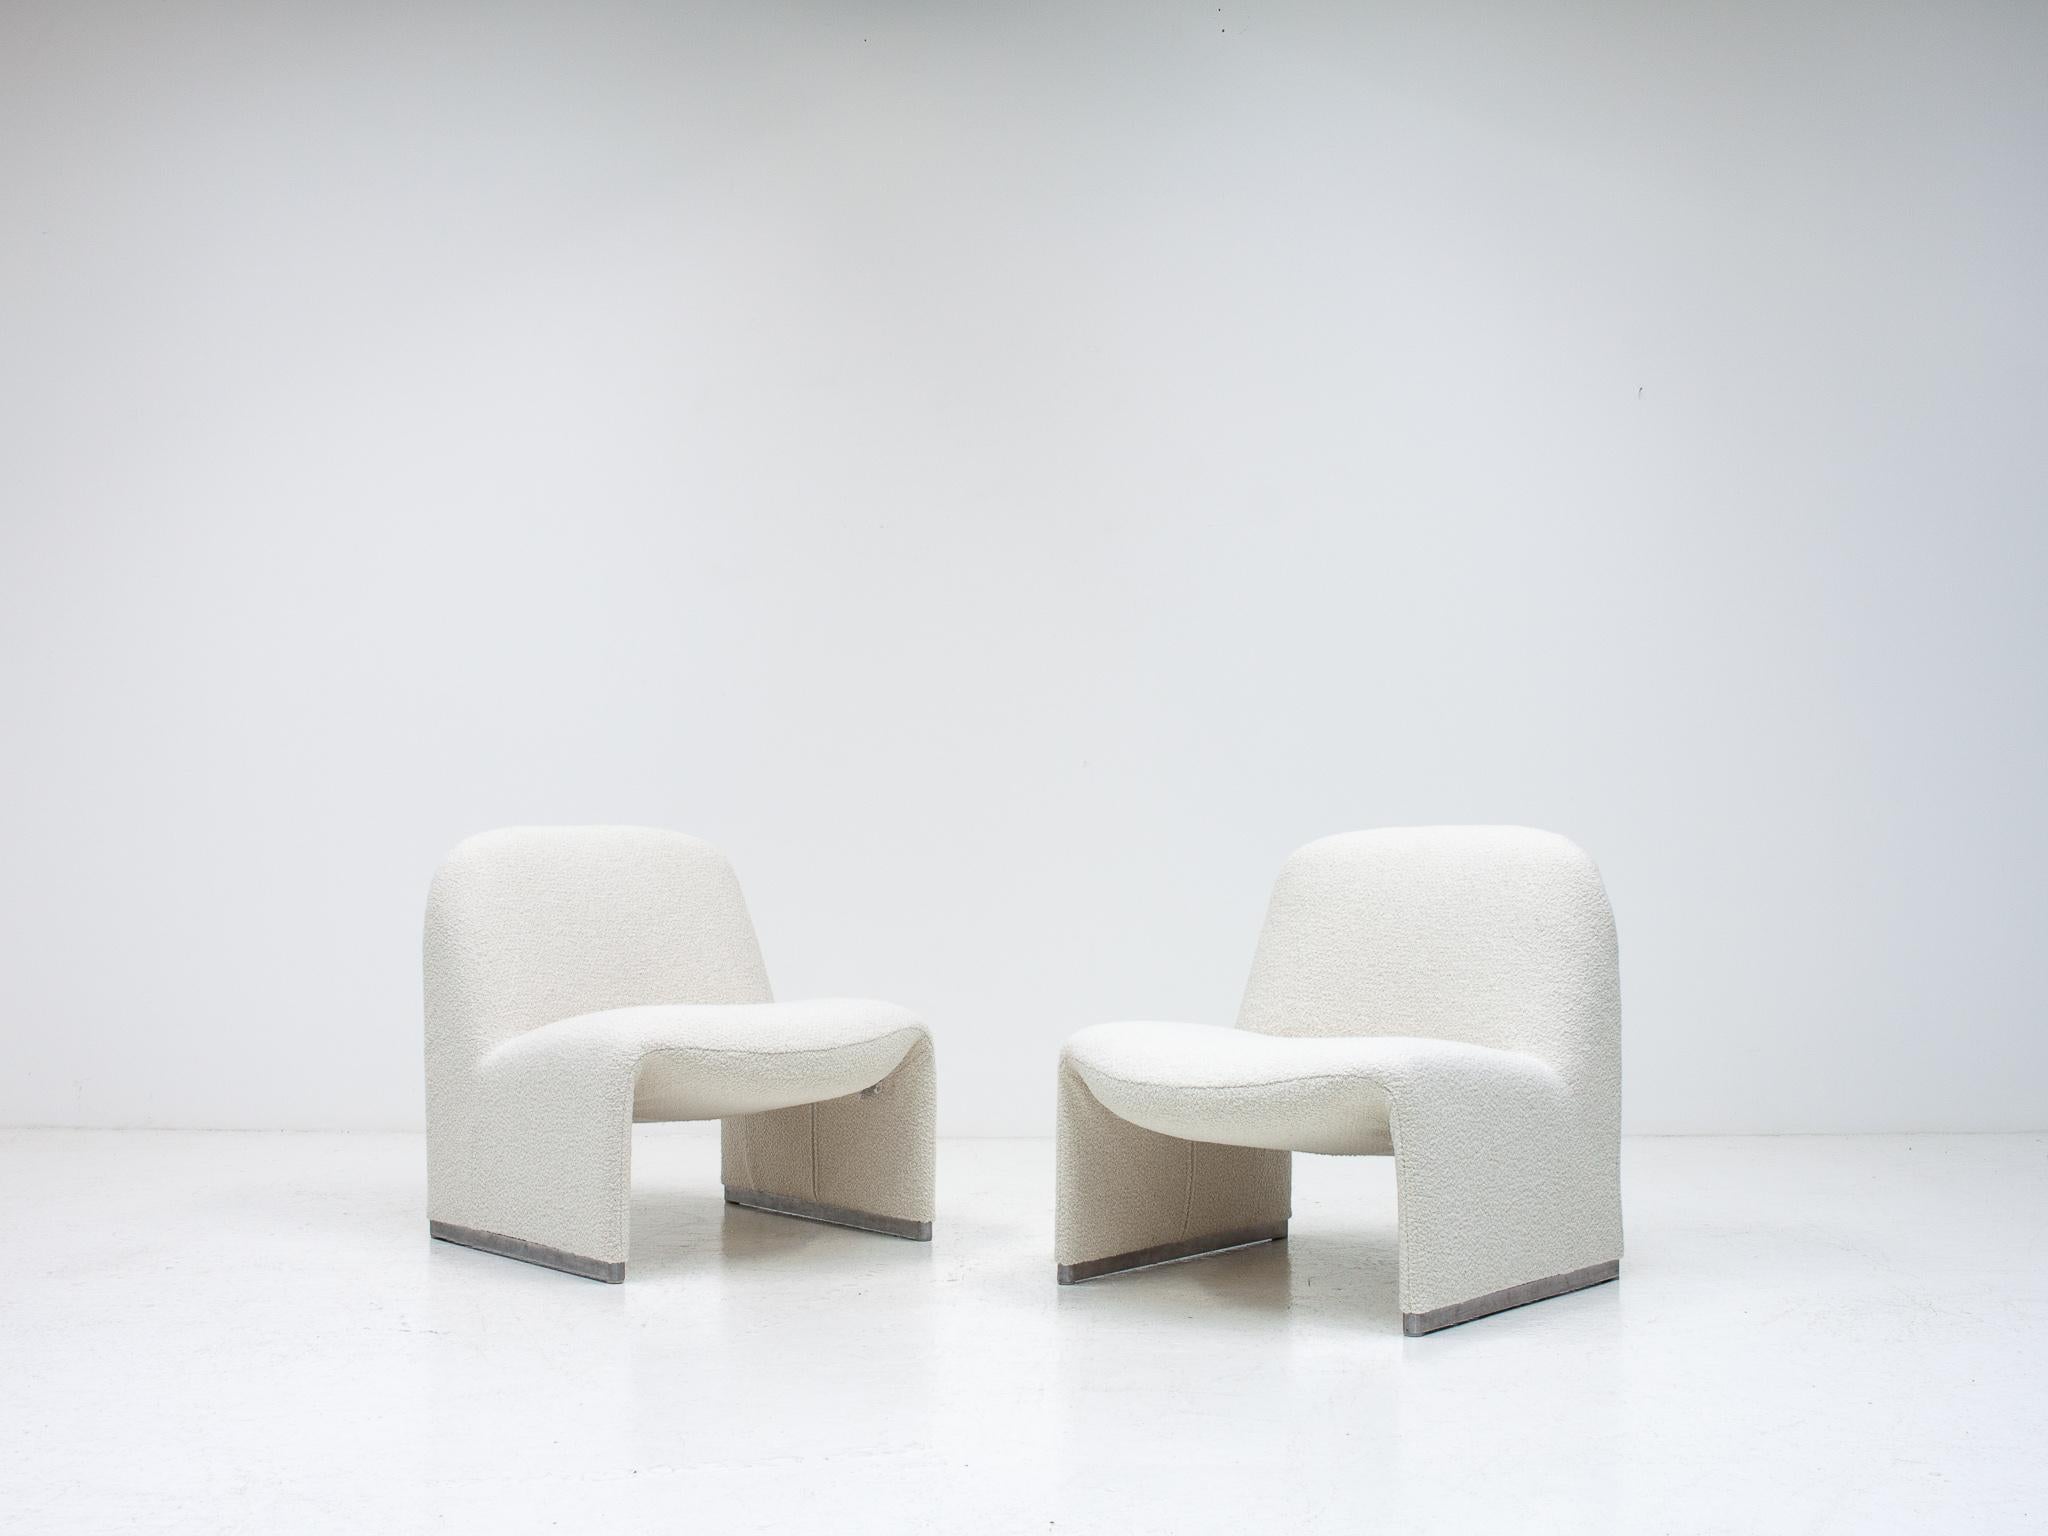 20th Century Giancarlo Piretti “Alky” Chairs In Yarn Collective bouclé *Customizable*